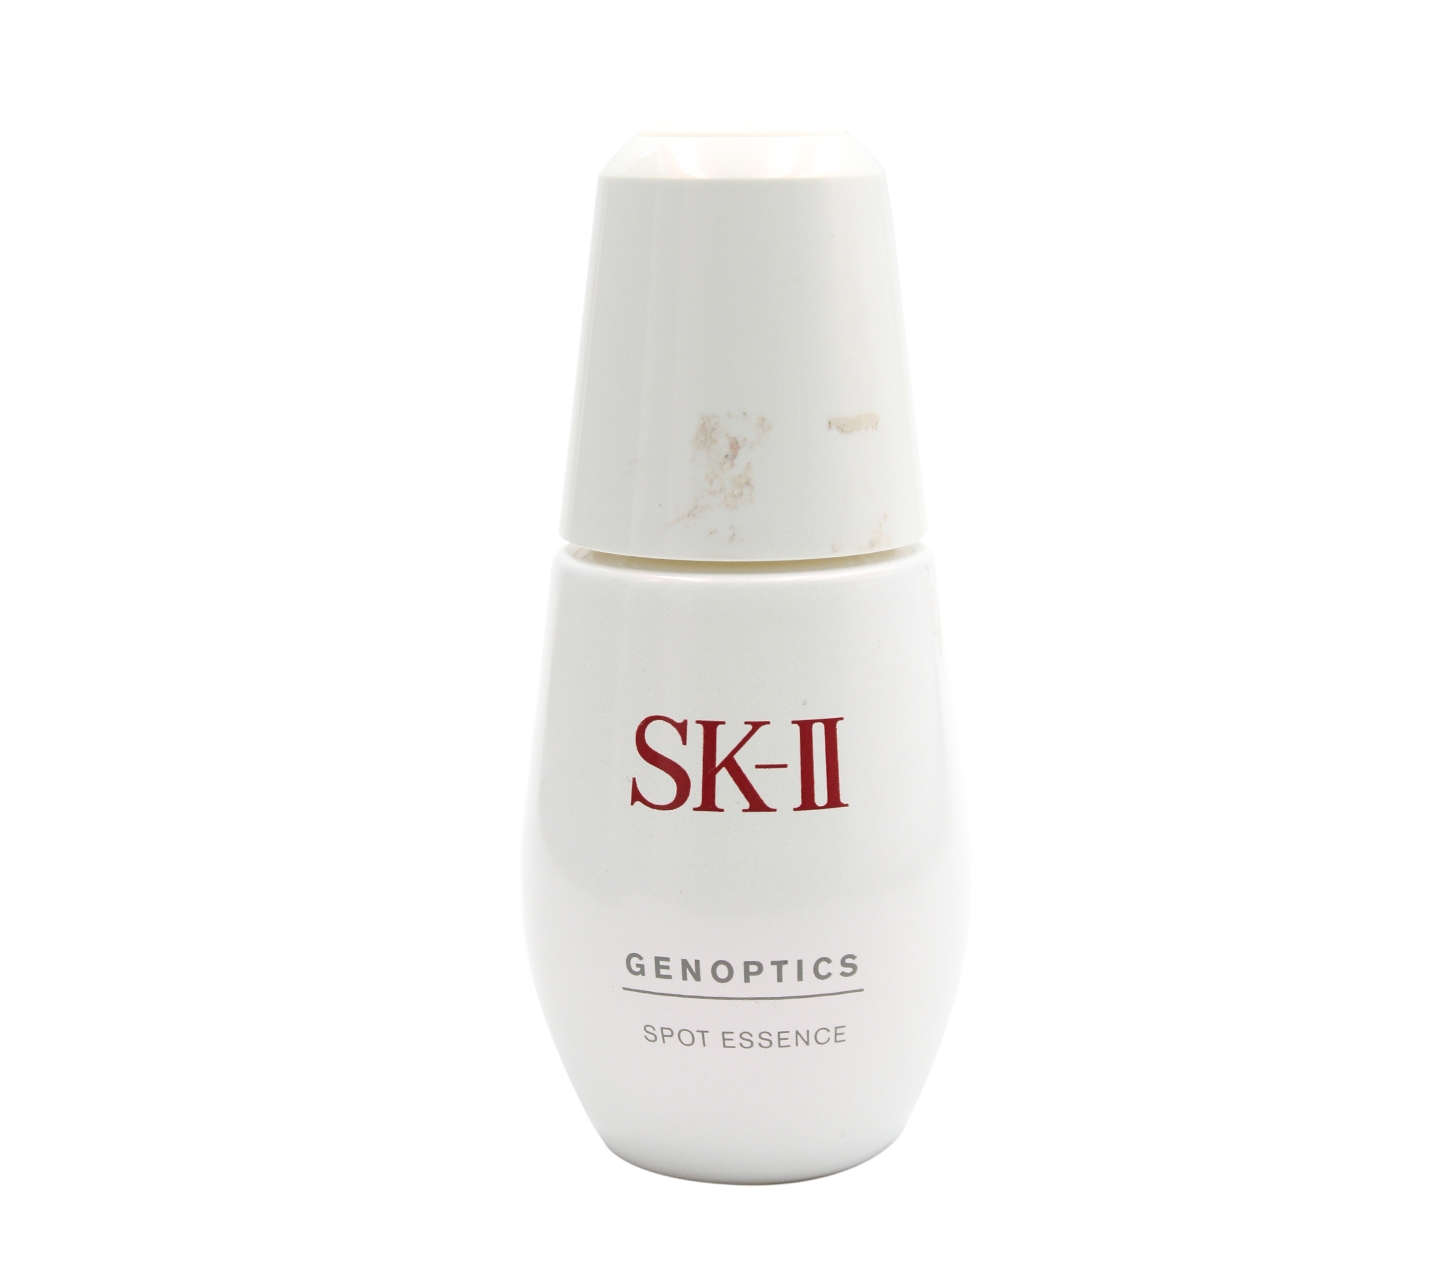 SK-II Genoptics Spot Essence Skin Care